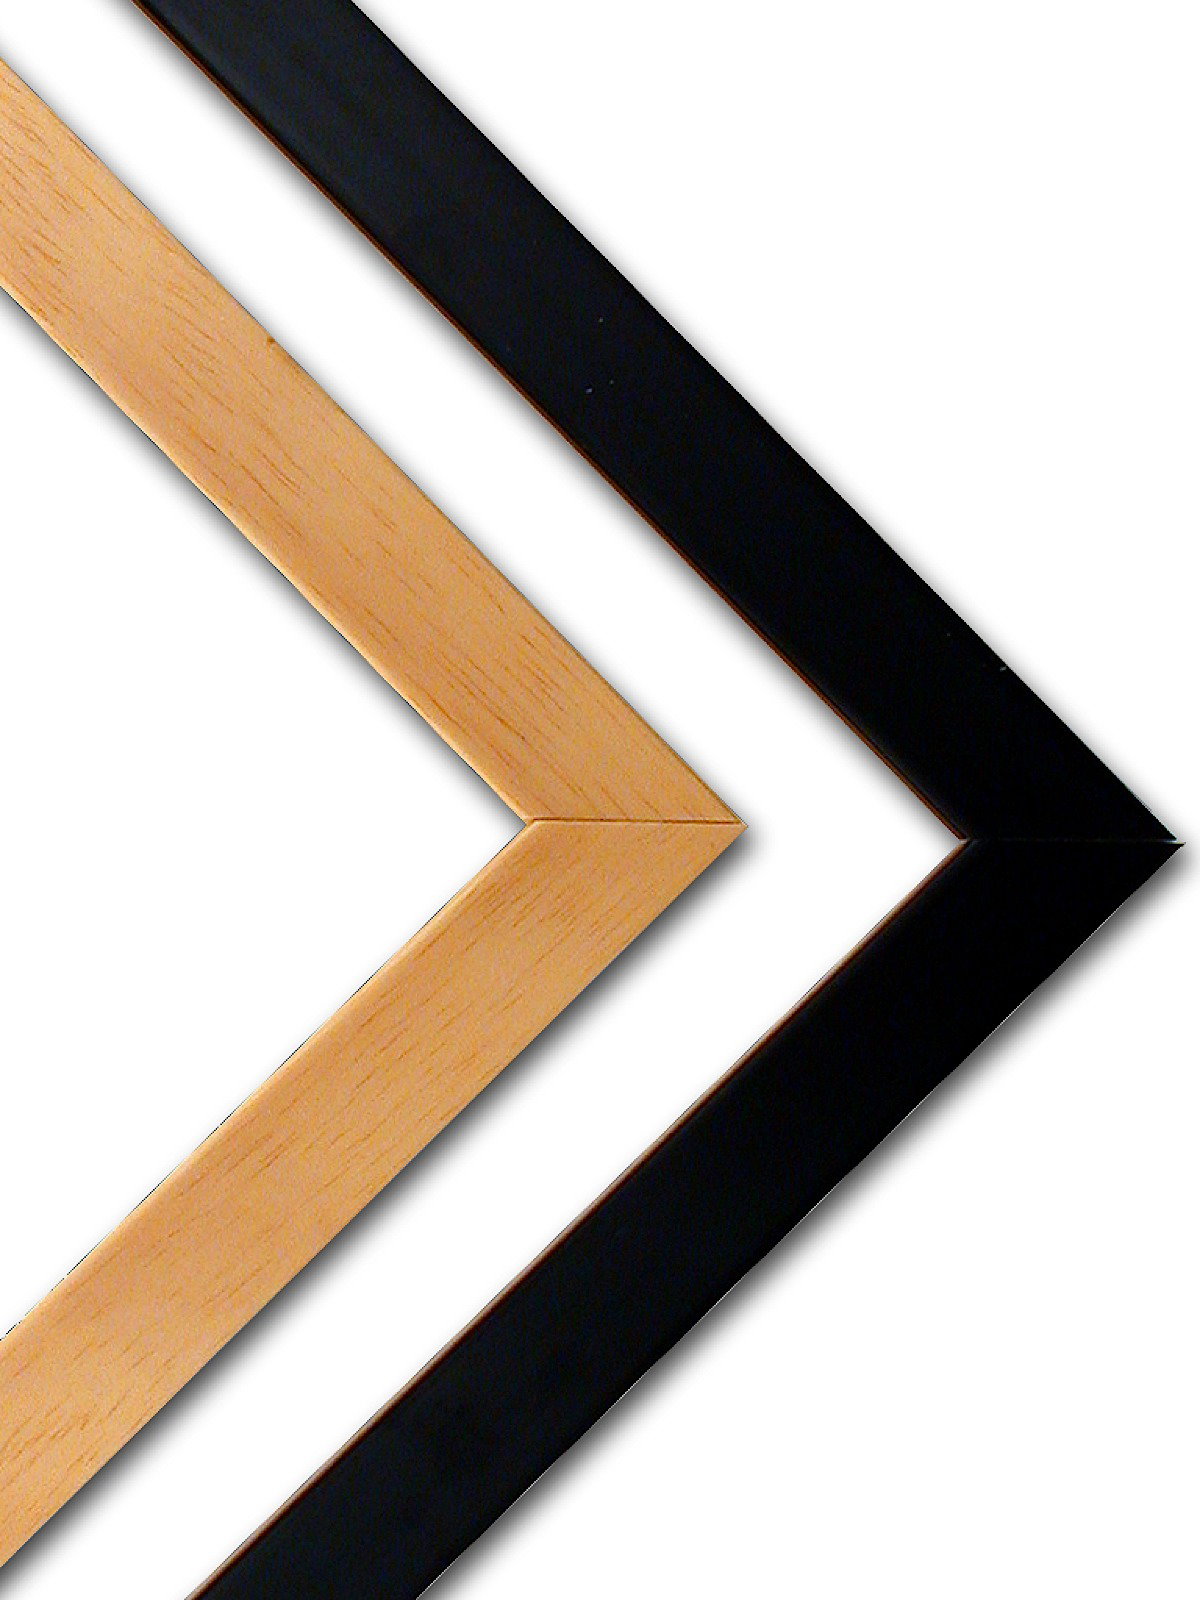 Nielsen Bainbridge Wood Frame Kits | MisterArt.com